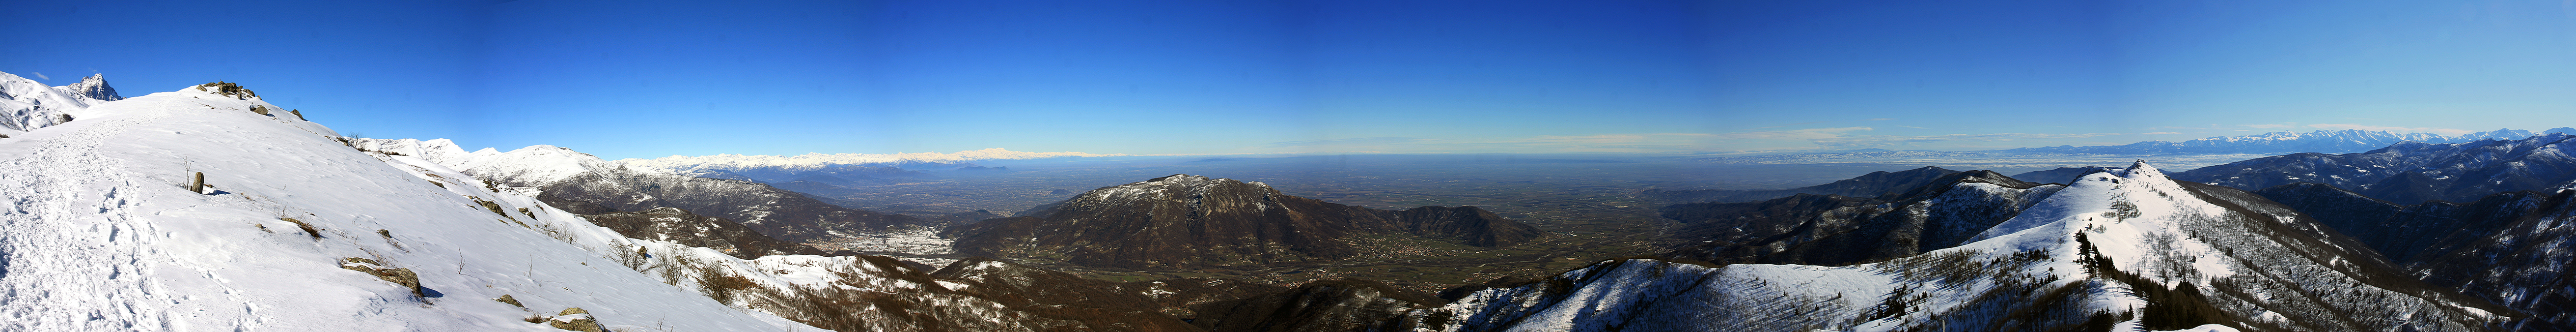 Panorama 02-1.jpg